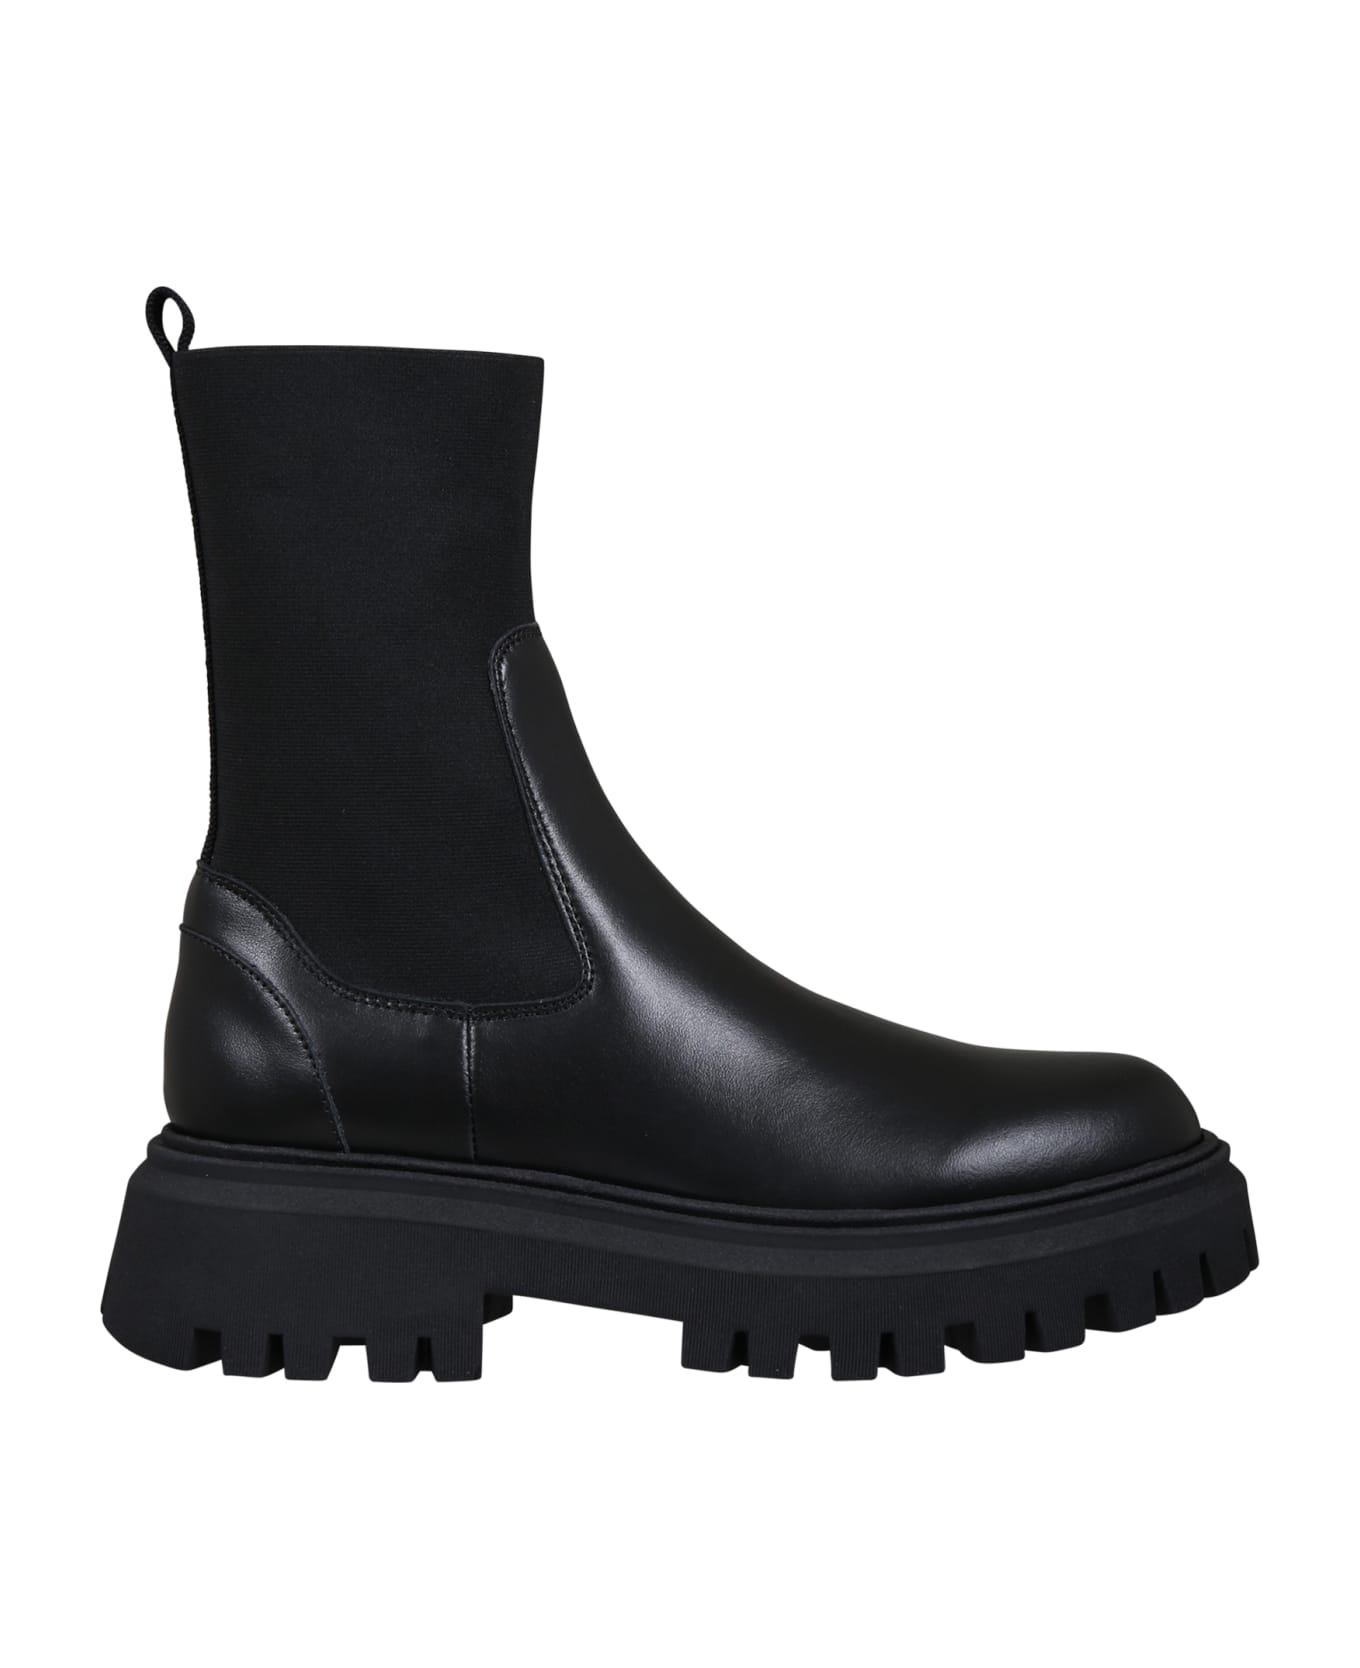 Moncler Black Boots For Girl With Logo - Black シューズ